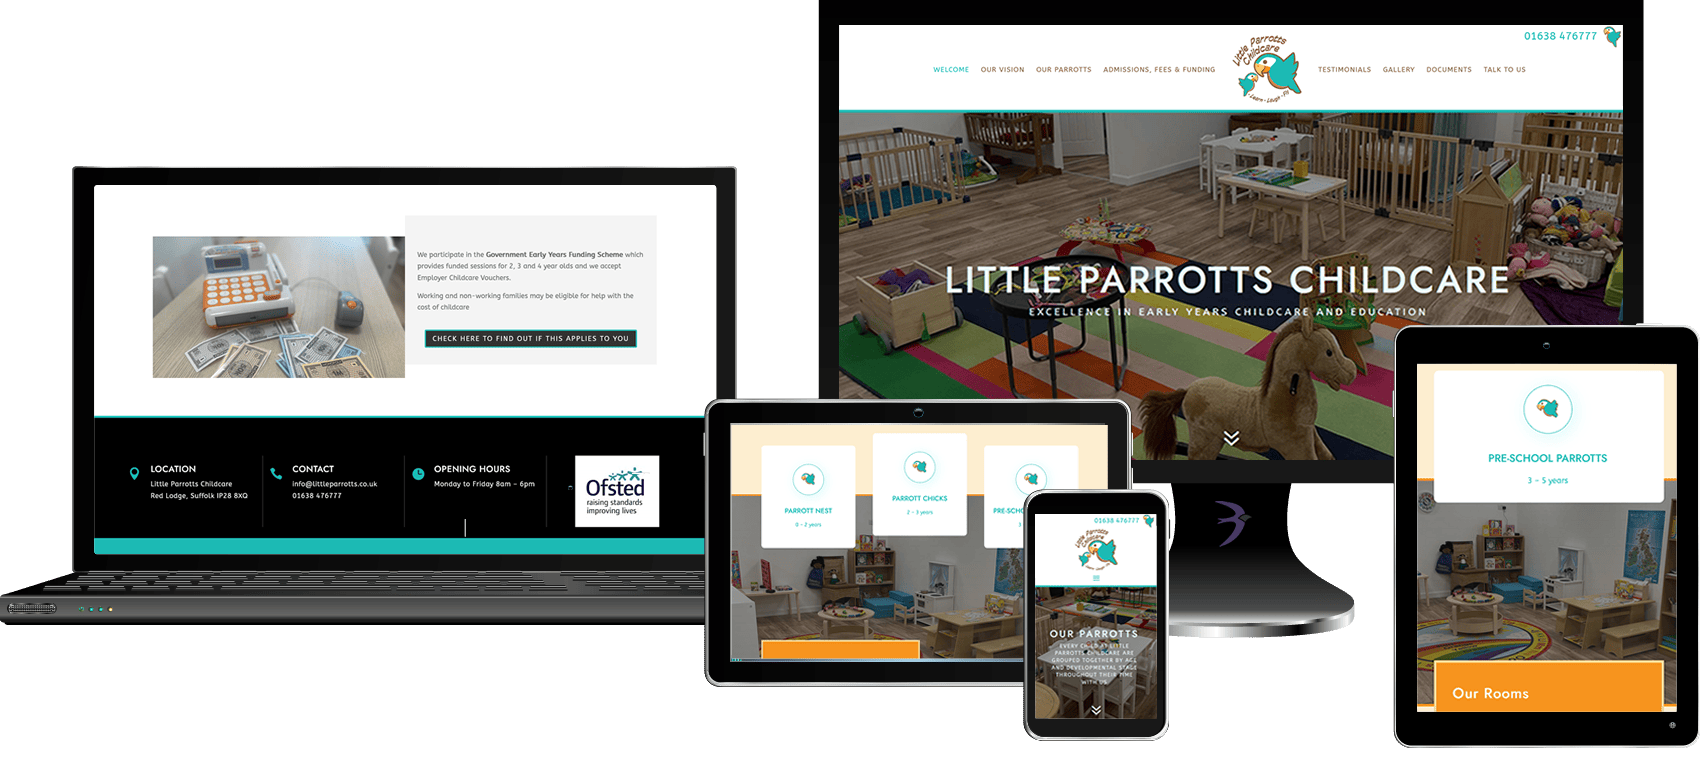 Little Parrotts Childcare website by Mdsign